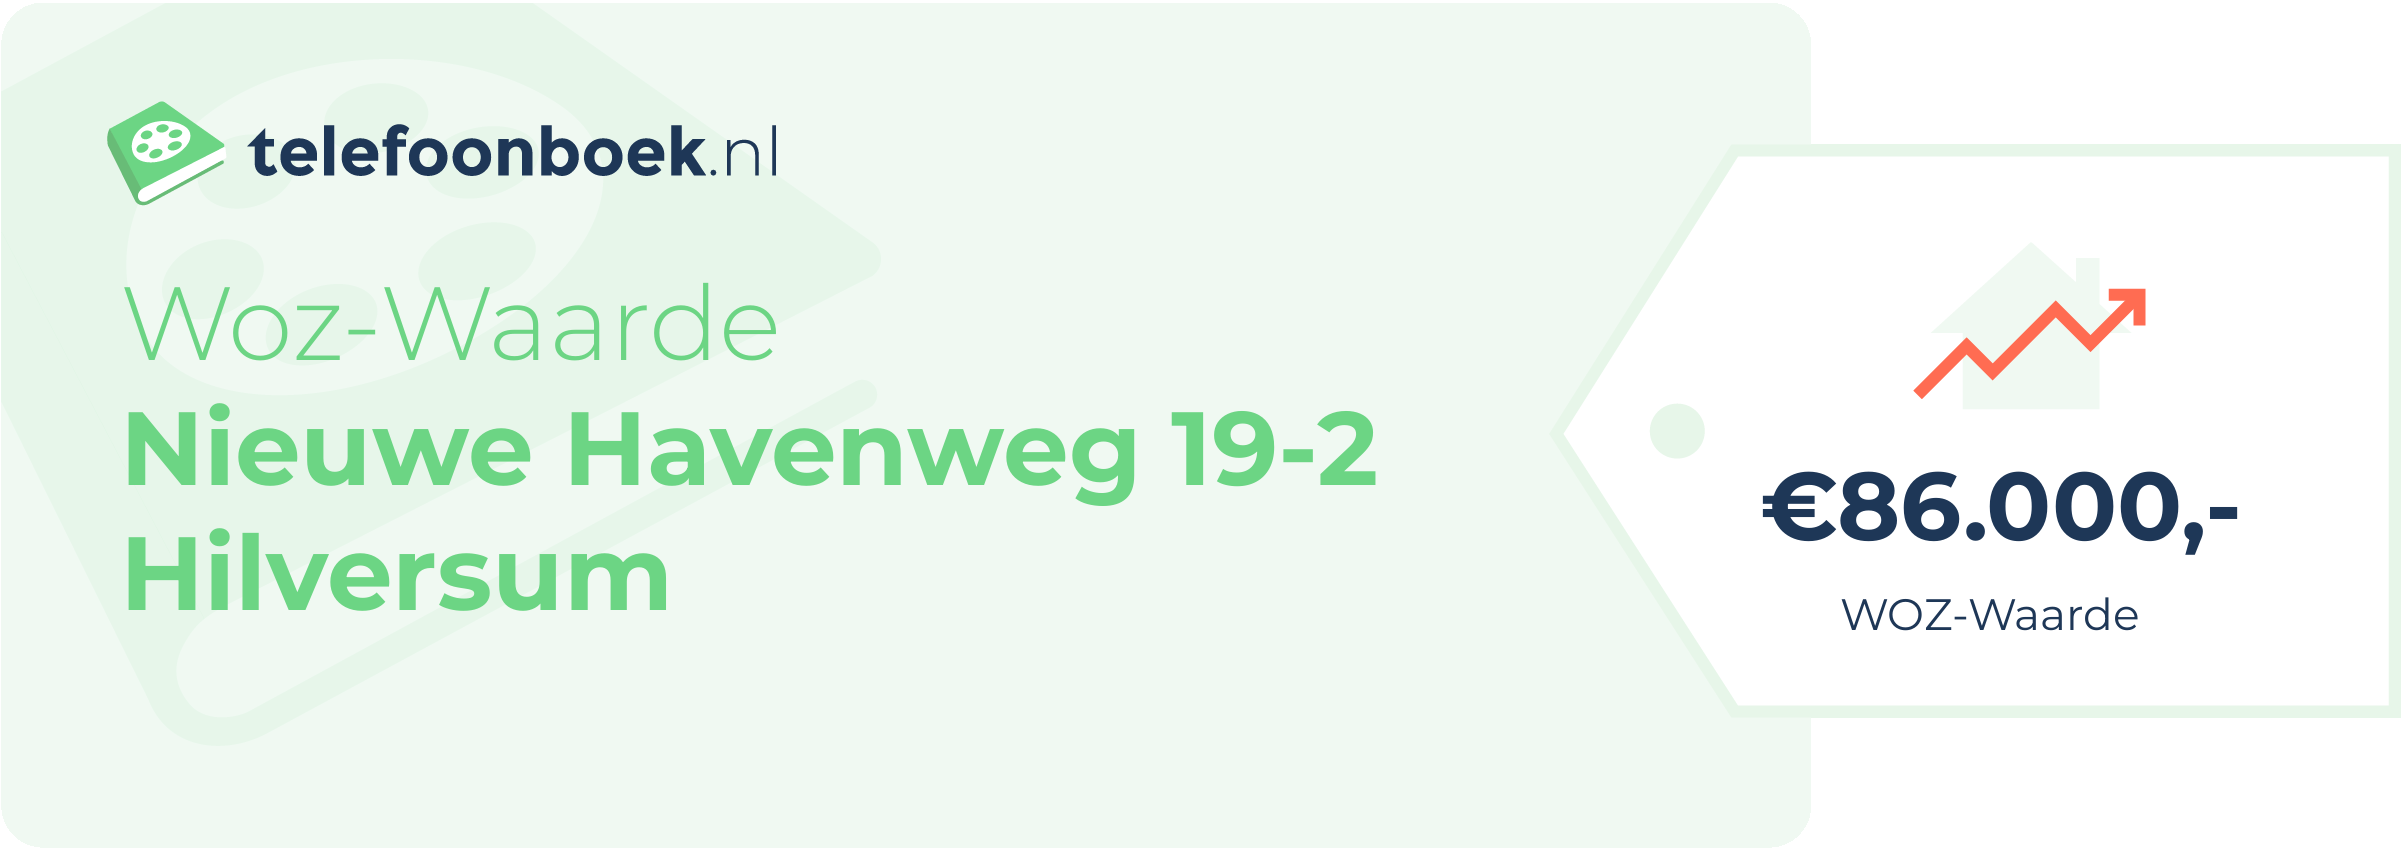 WOZ-waarde Nieuwe Havenweg 19-2 Hilversum